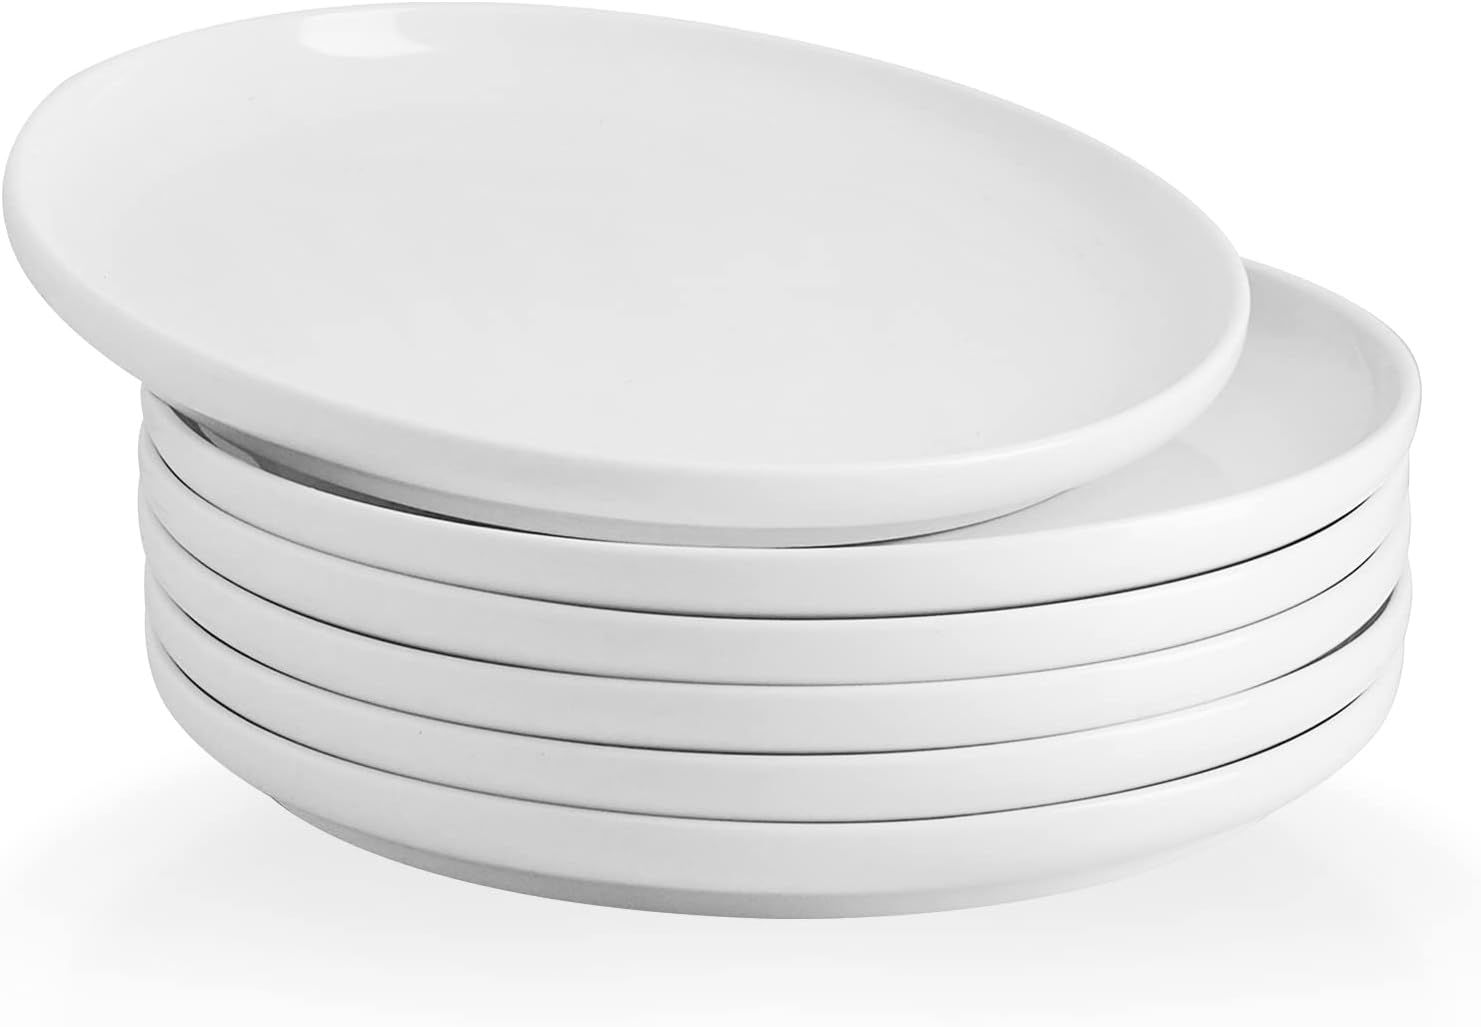 Kanwone Porcelain Dinner Plates - 10 Inch - Set of 6, White, Microwave and Dishwasher Safe Plates | Amazon (US)